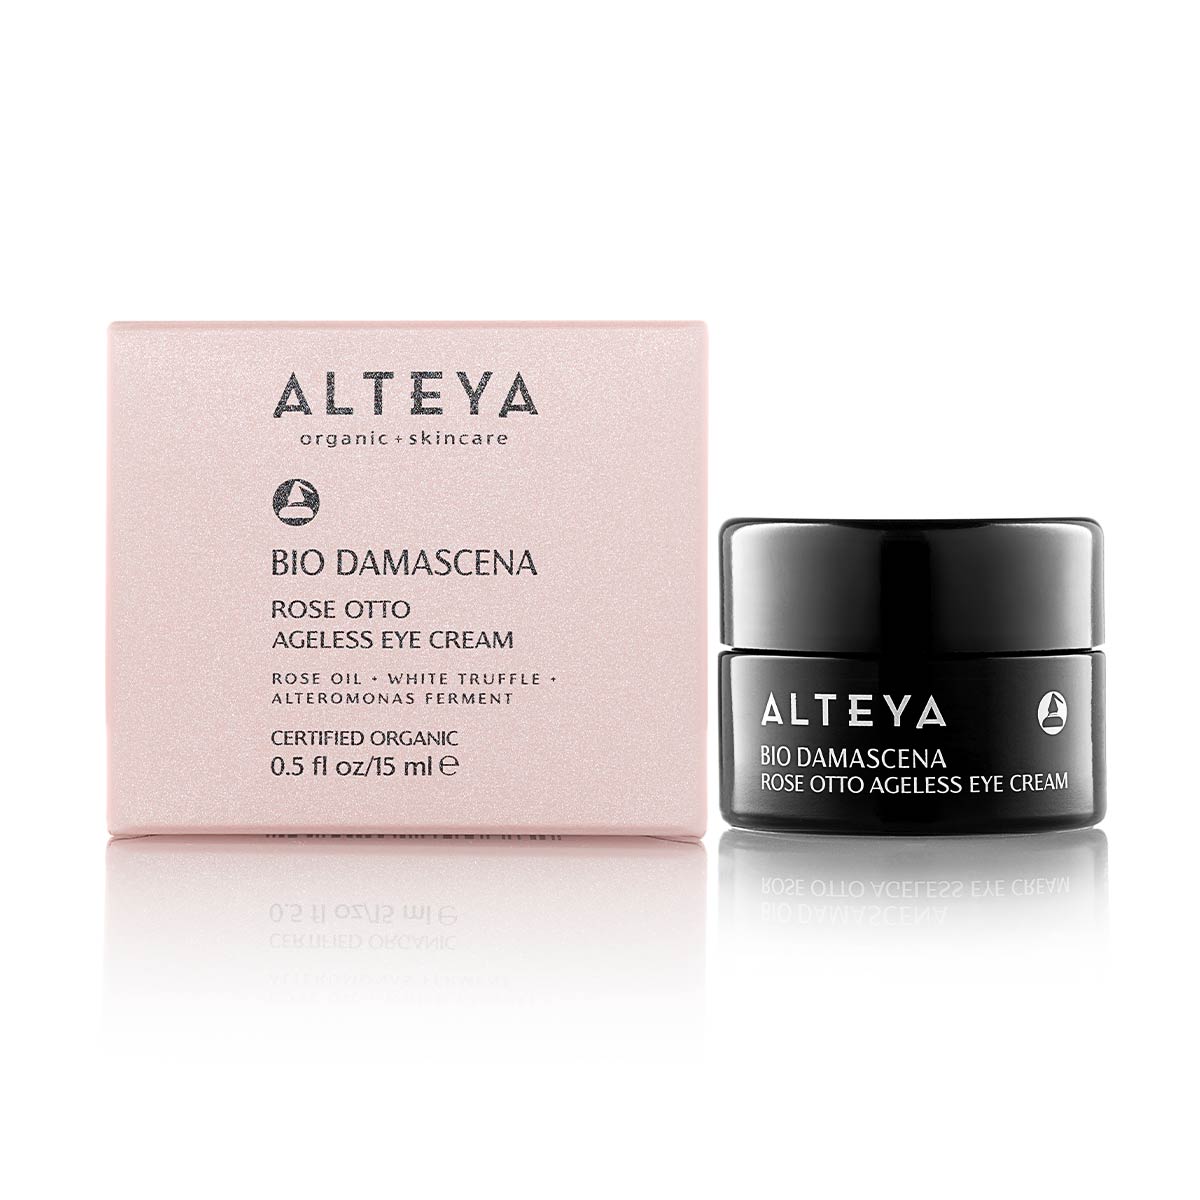 Alteya Organics Bio Damascena Rose Otto Ageless Eye Cream provides nourishment and hydration to the delicate eye contour.